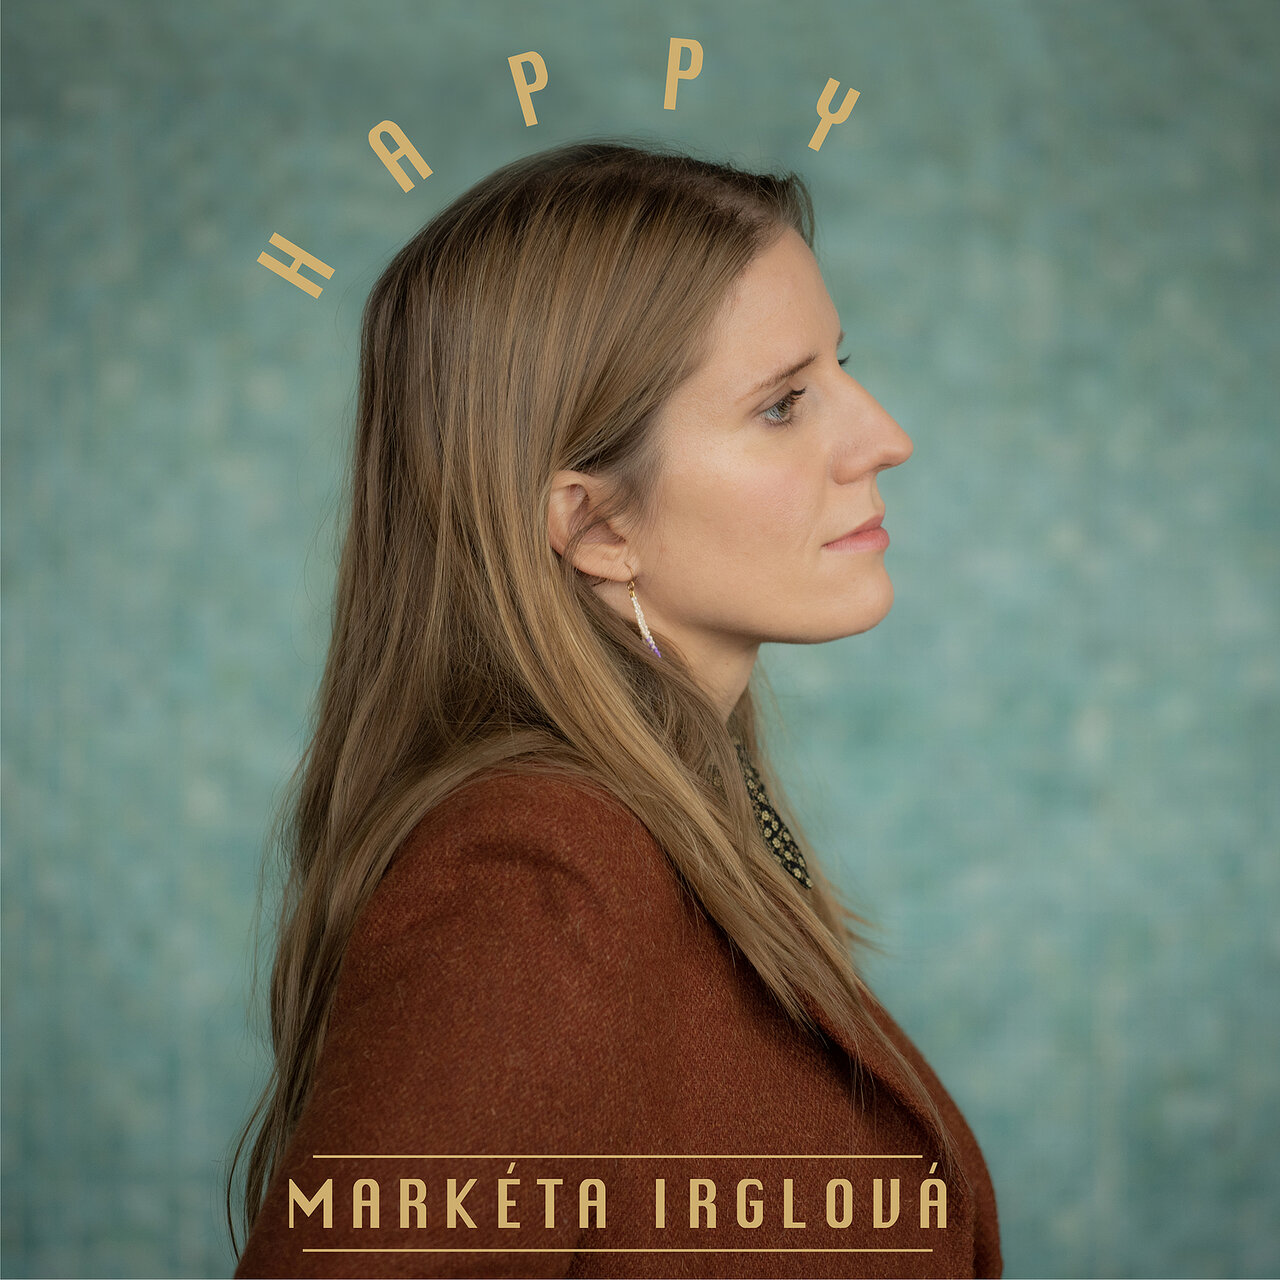 Markéta Irglová Happy cover artwork